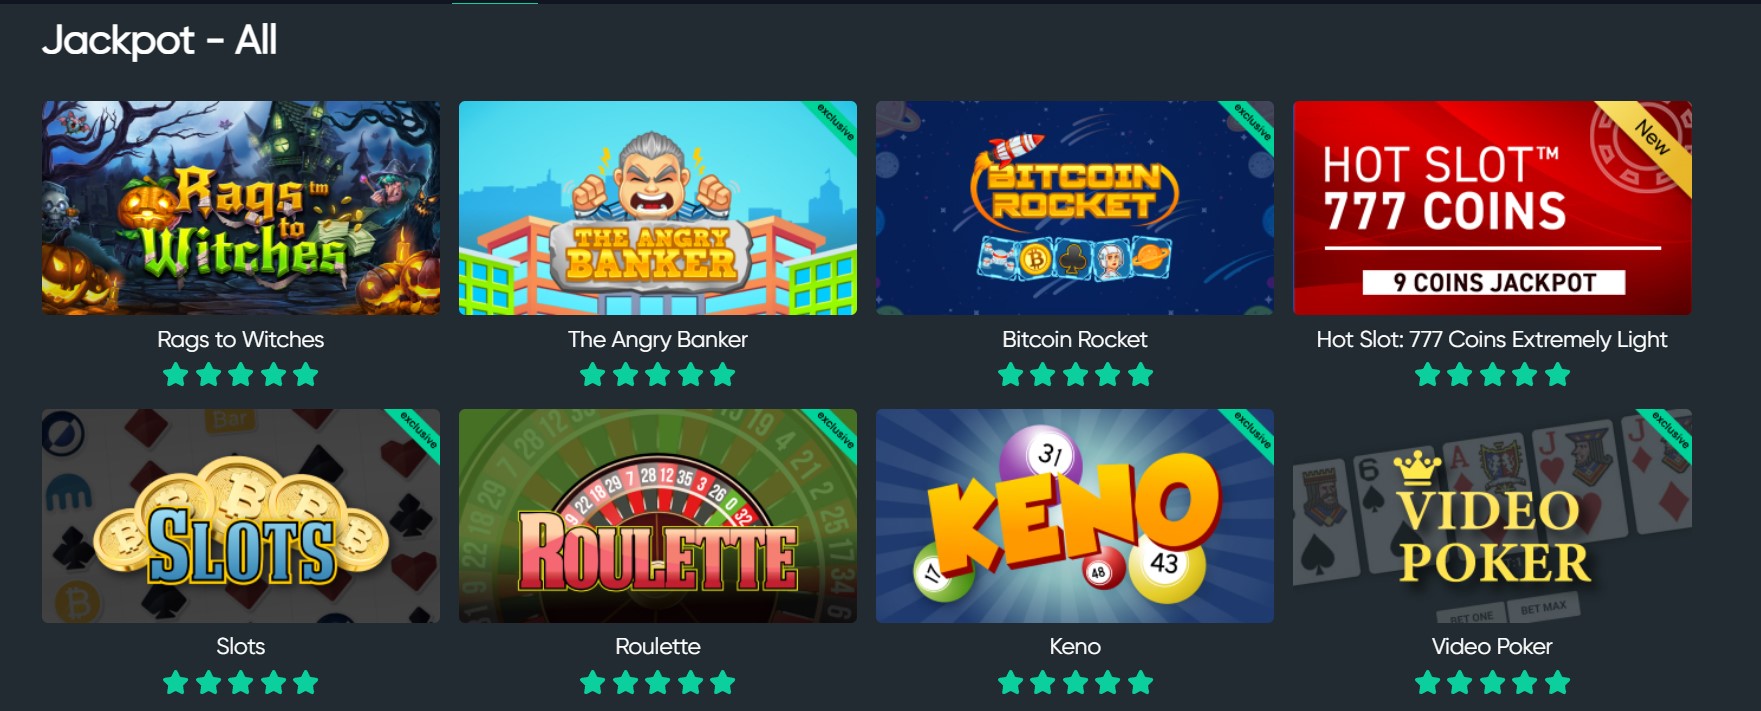 juegos de bote bitcoin.com